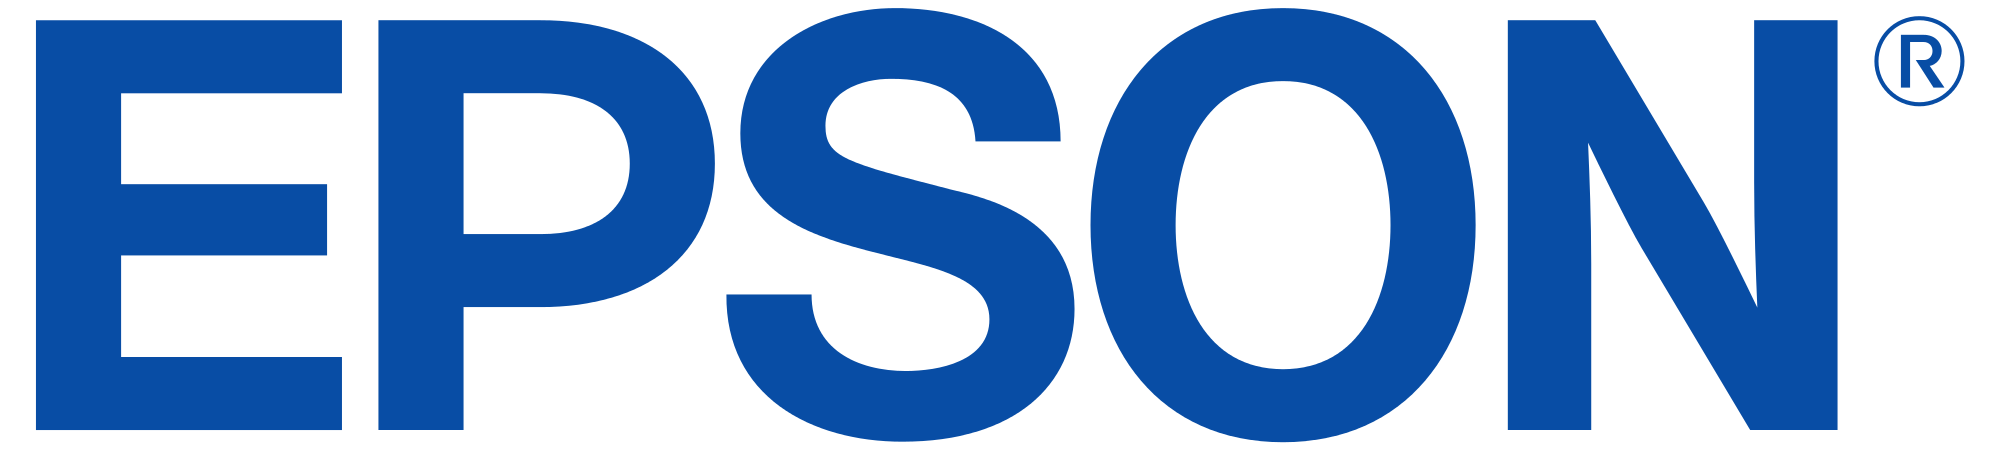 EPSON-Logo.svg_